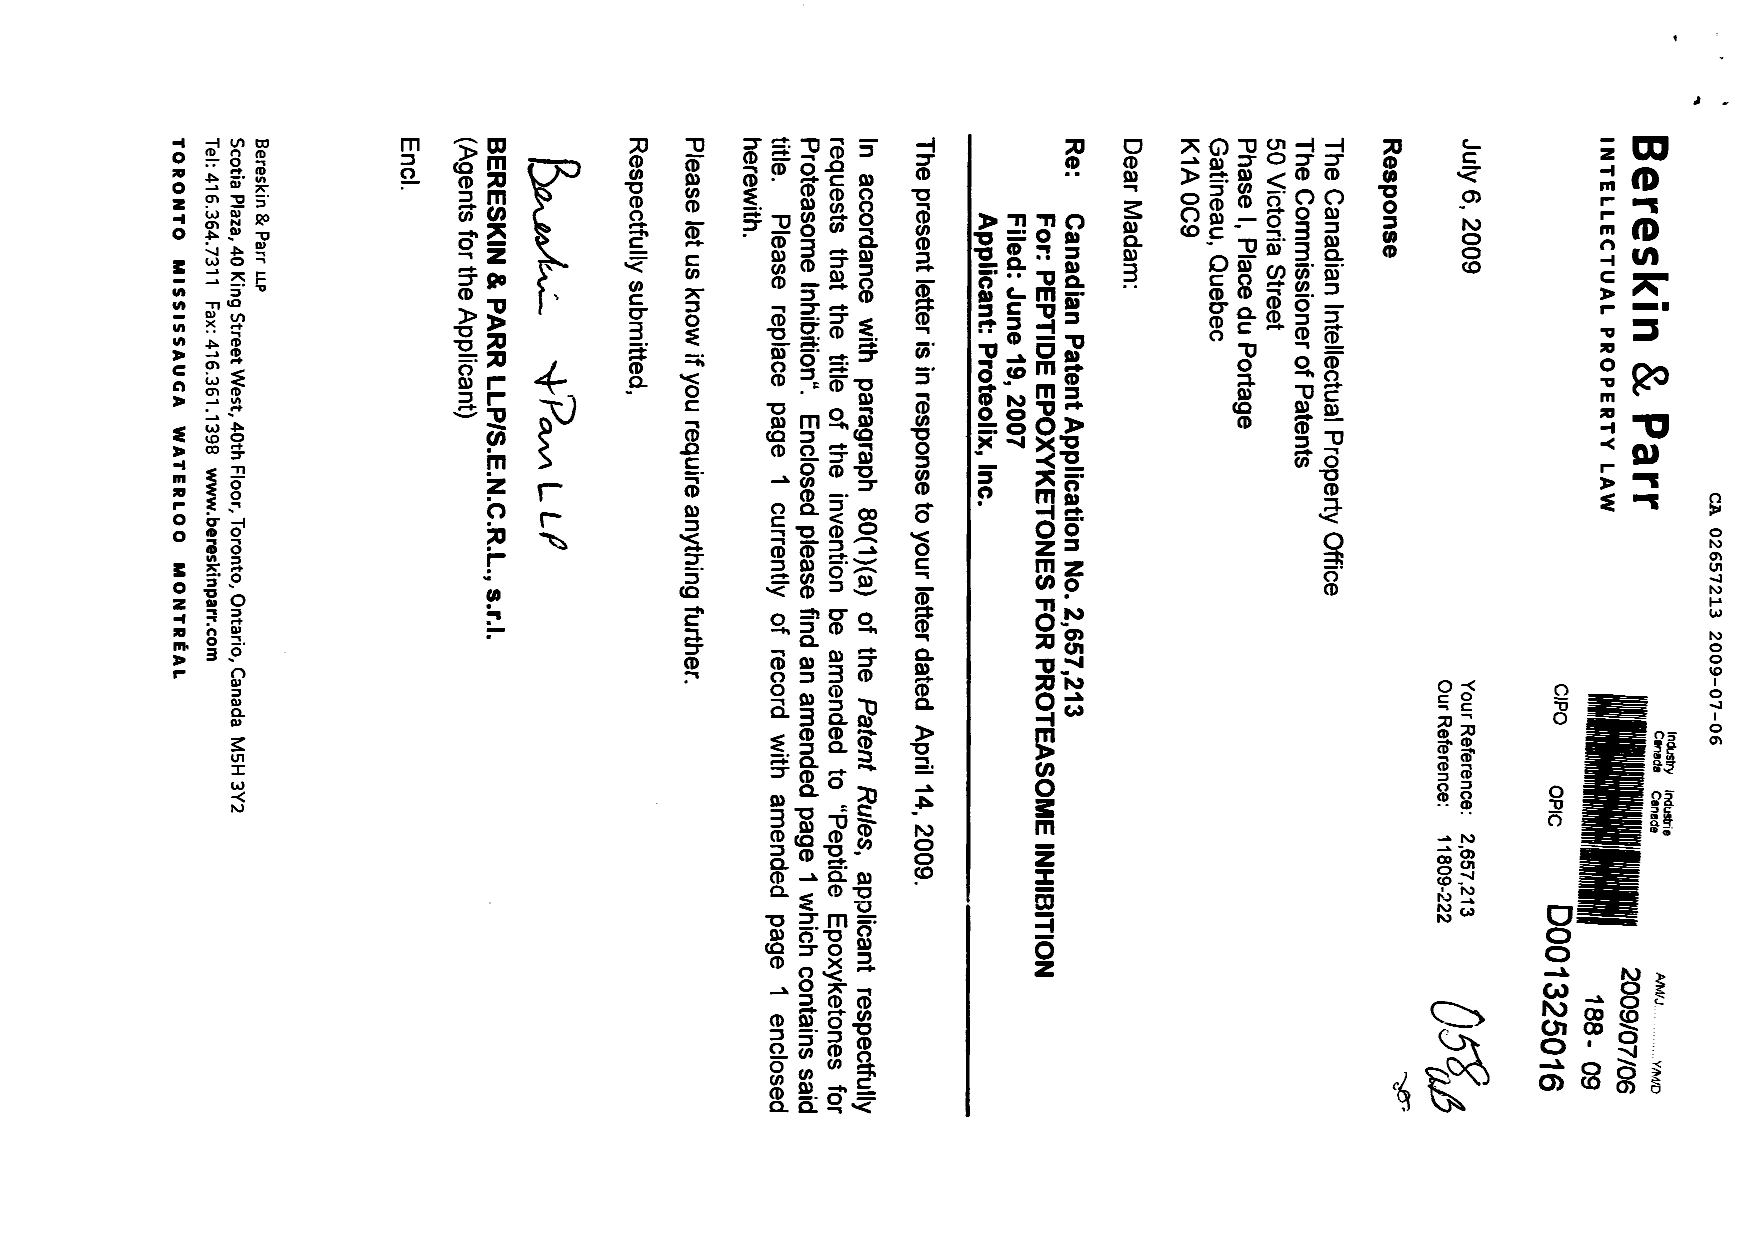 Canadian Patent Document 2657213. Correspondence 20090706. Image 1 of 2